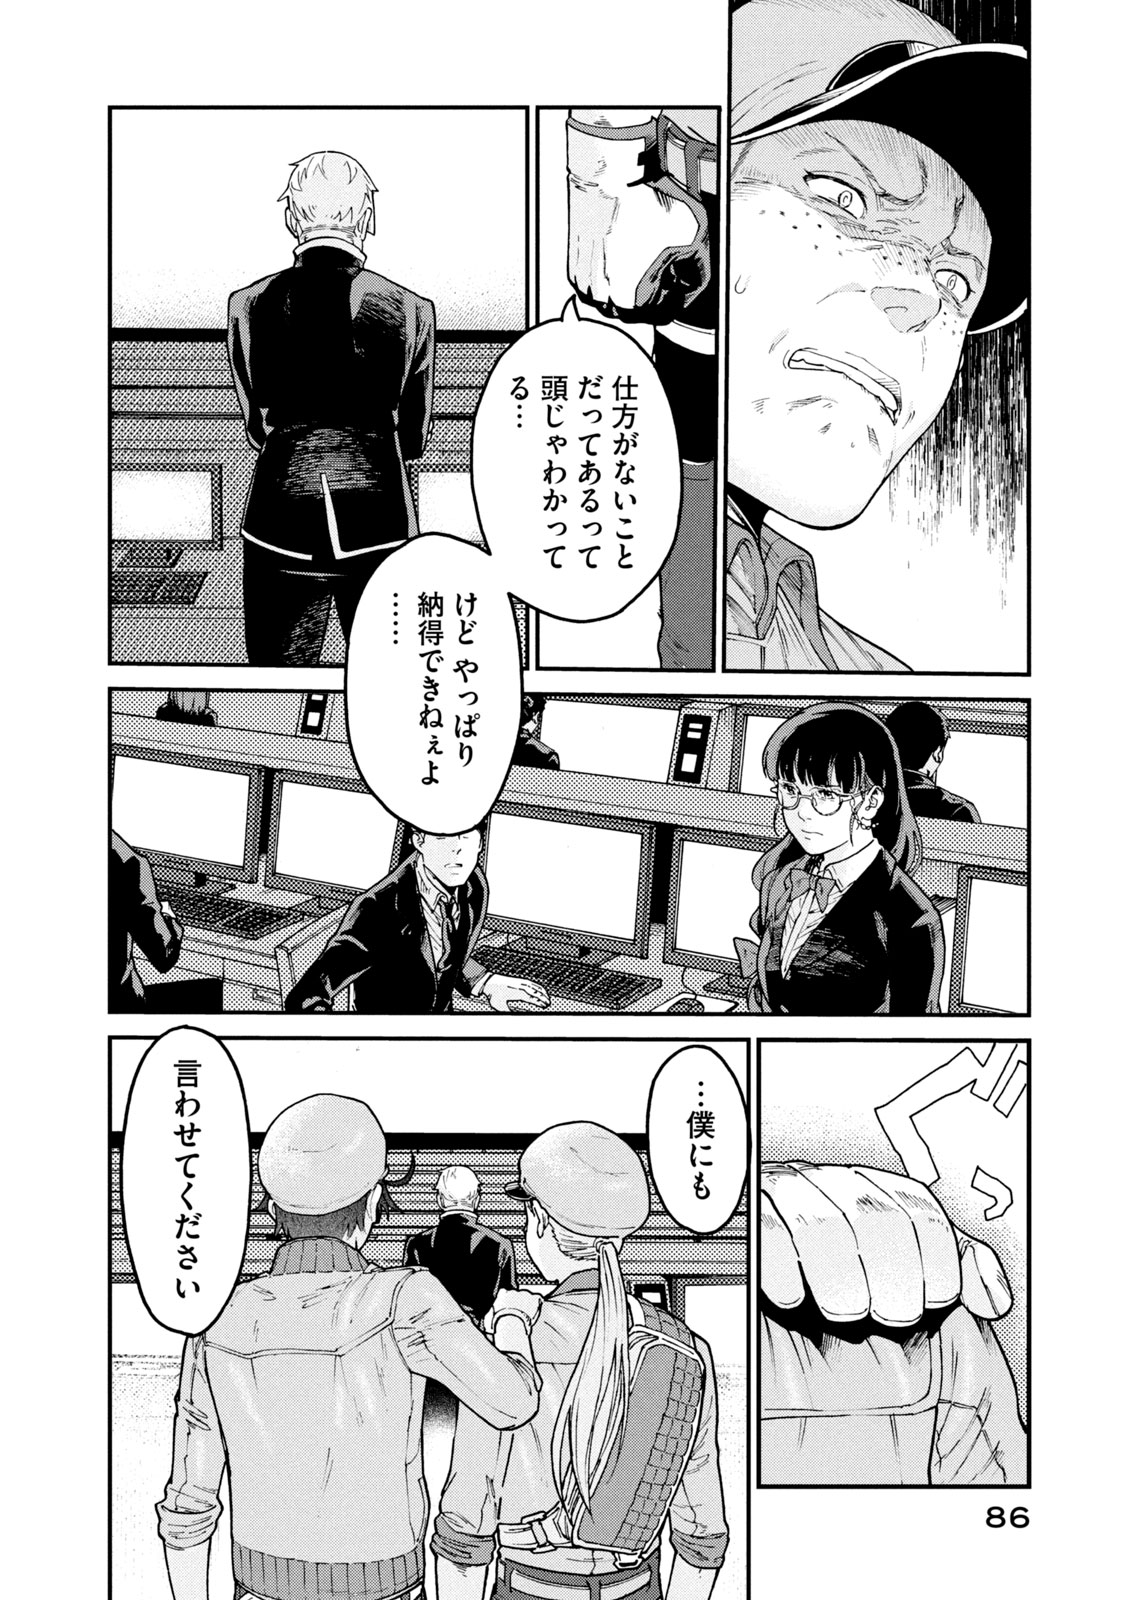 Hataraku Saibou BLACK - Chapter 34 - Page 24